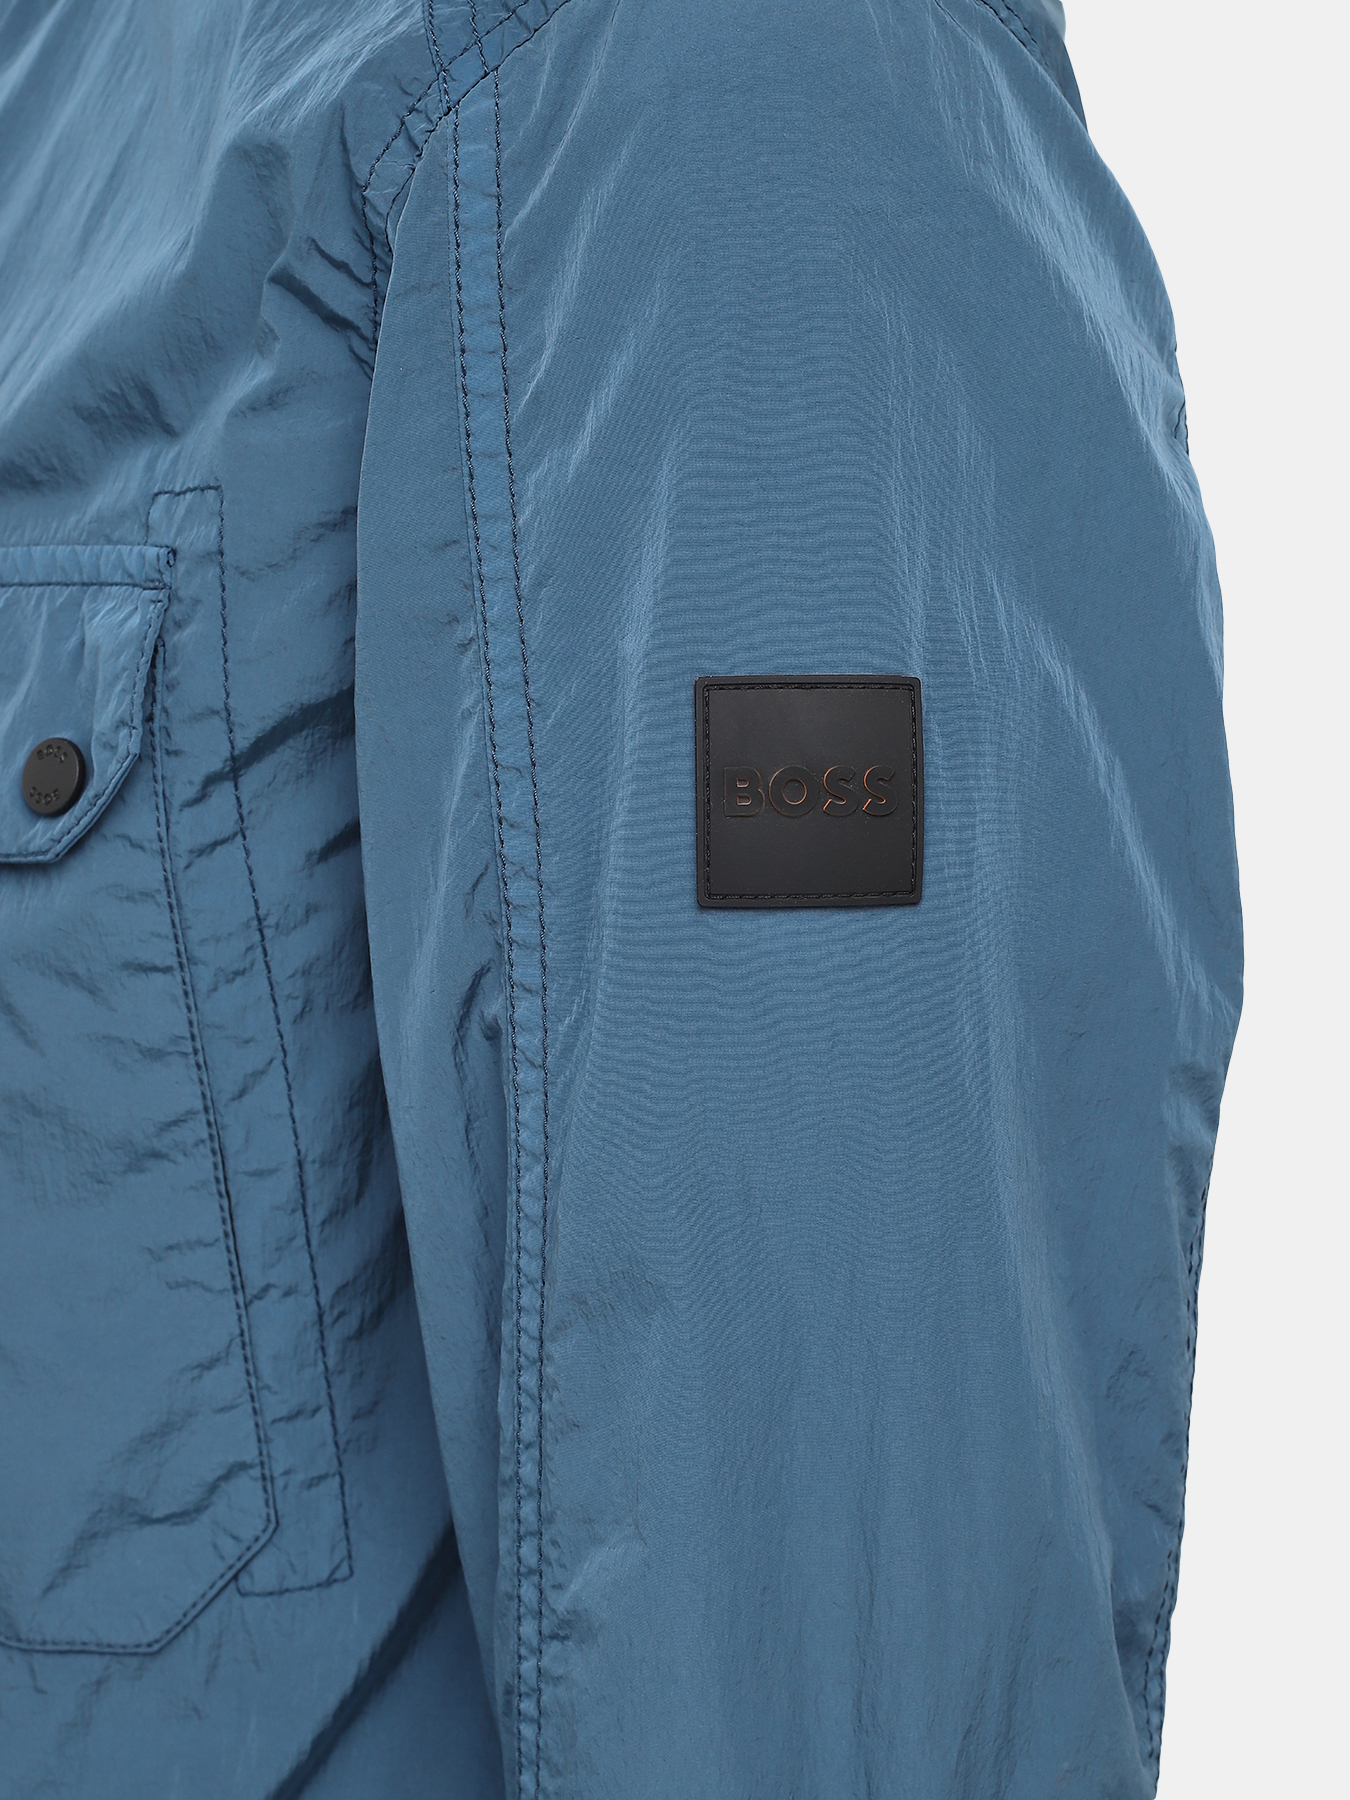 Куртка Odell D BOSS 421179-027, цвет синий, размер 52 - фото 5